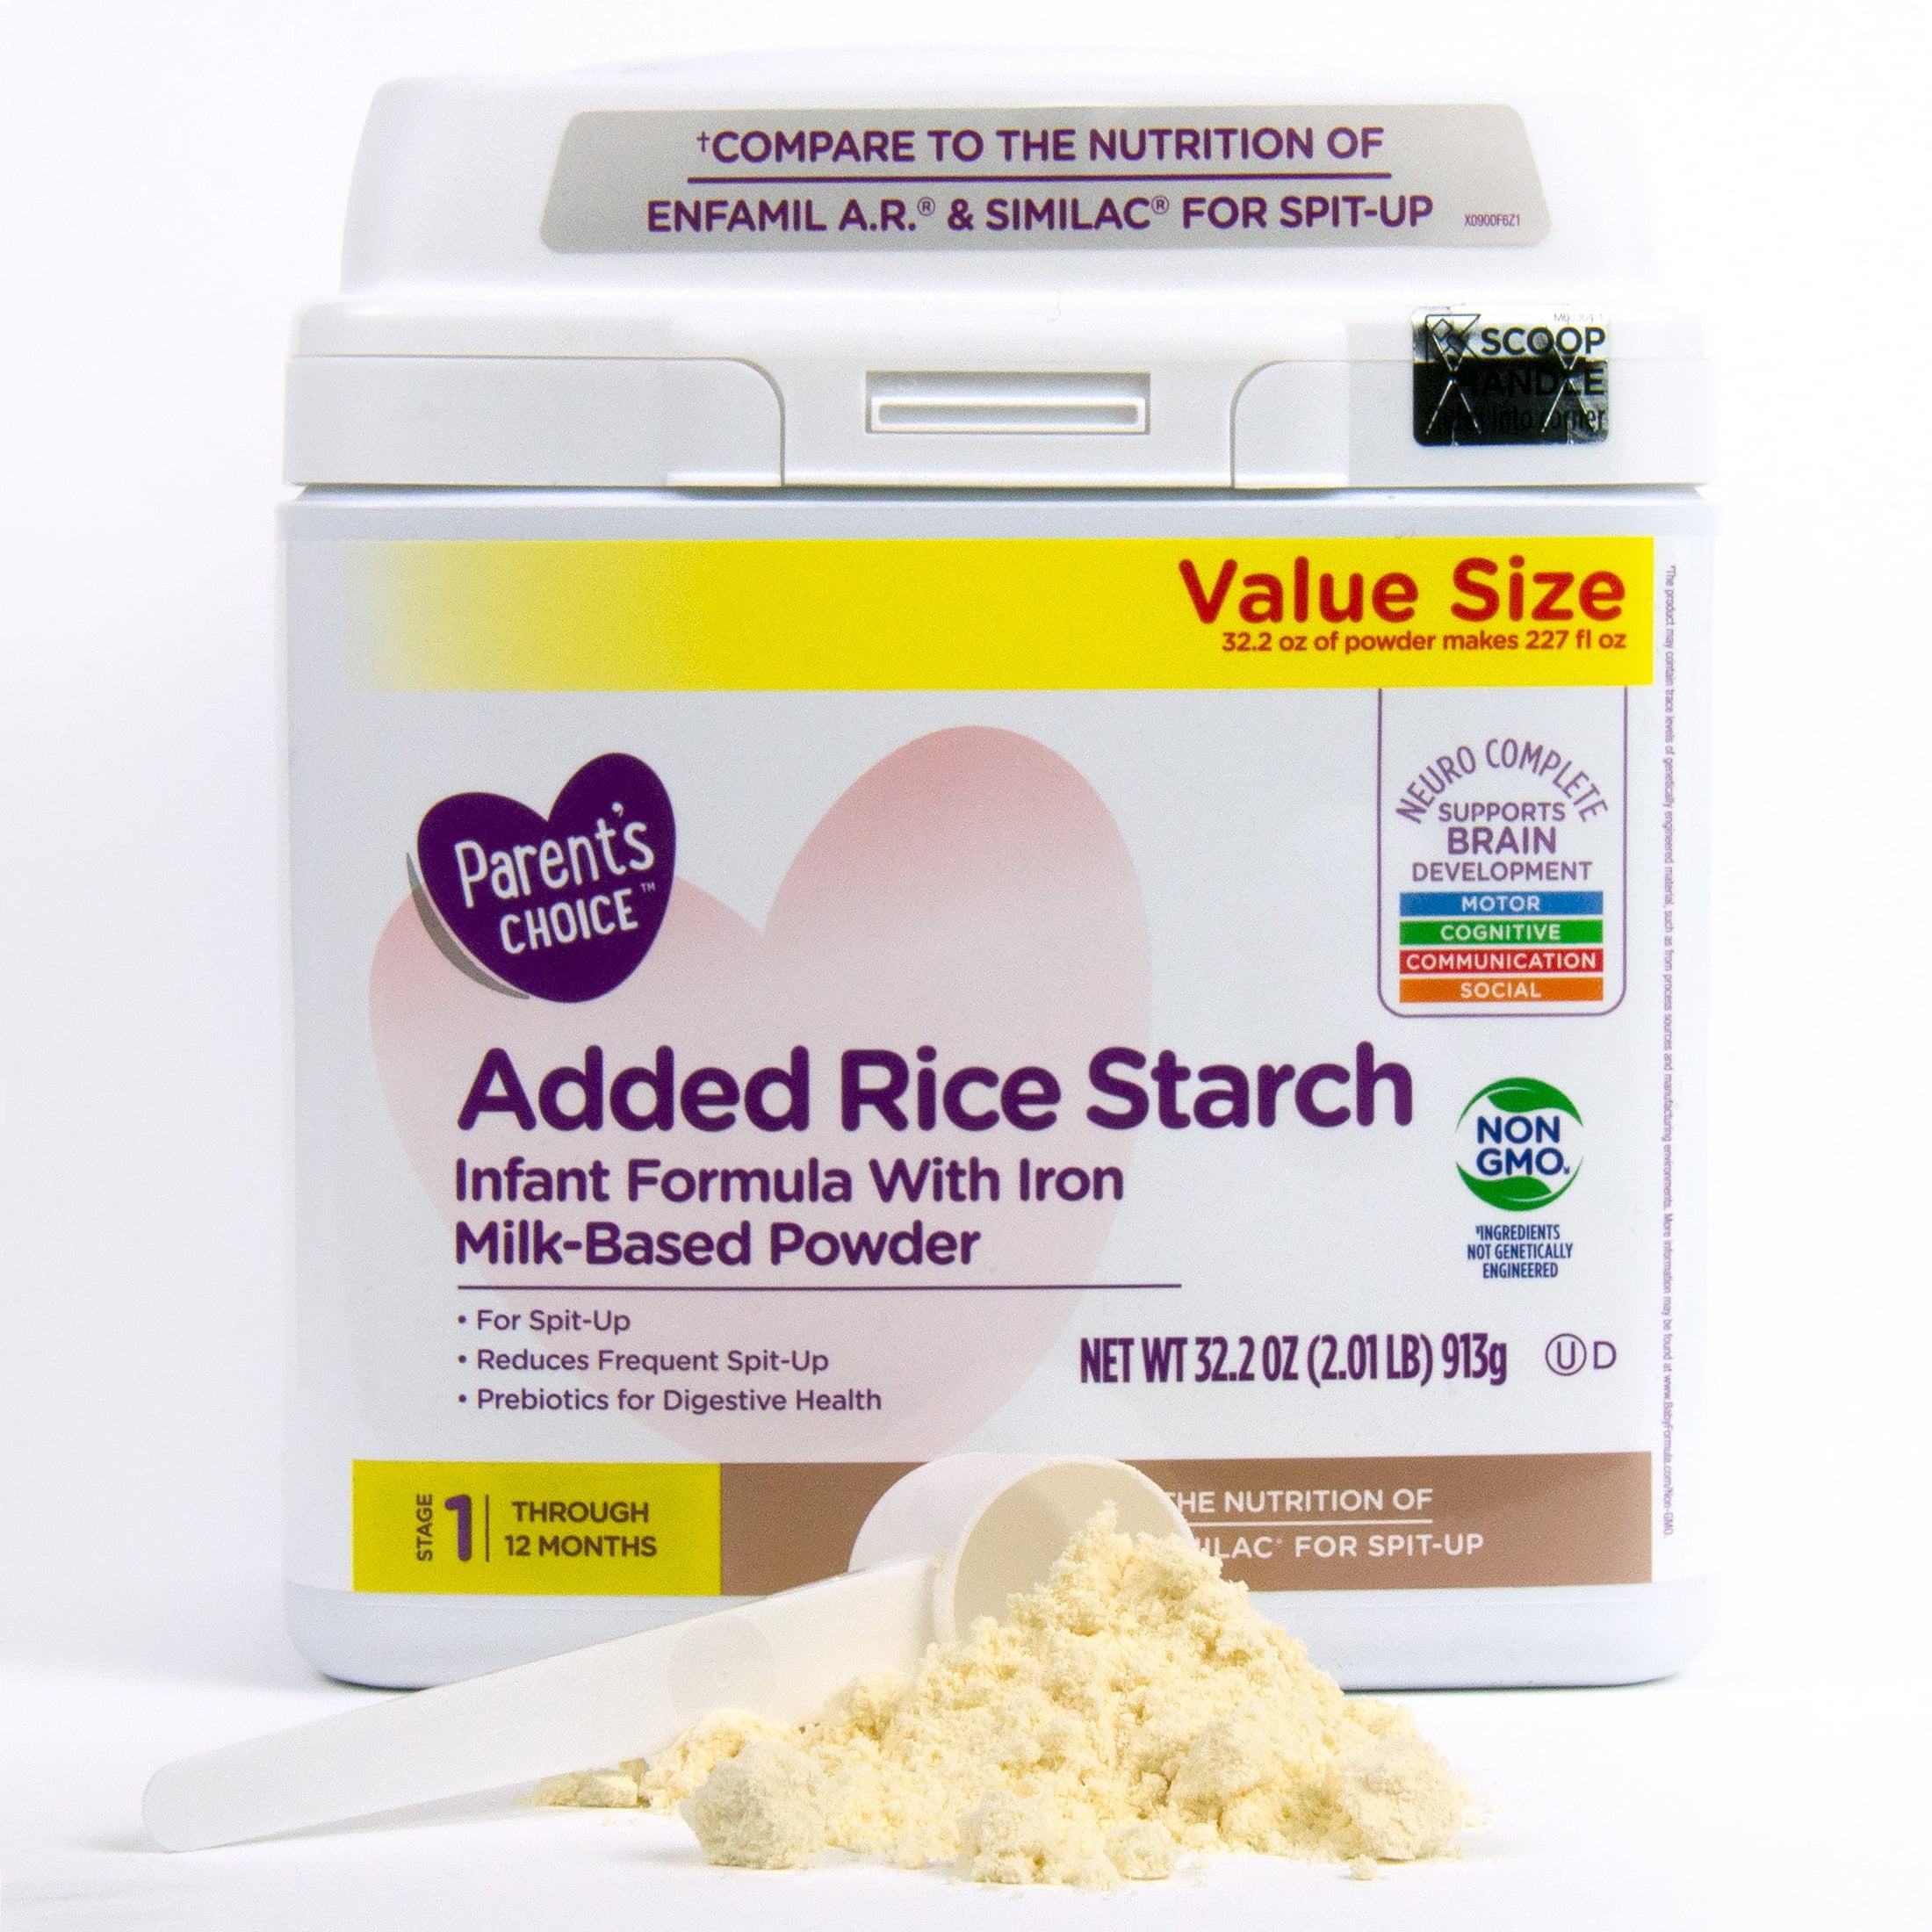 rice milk formula